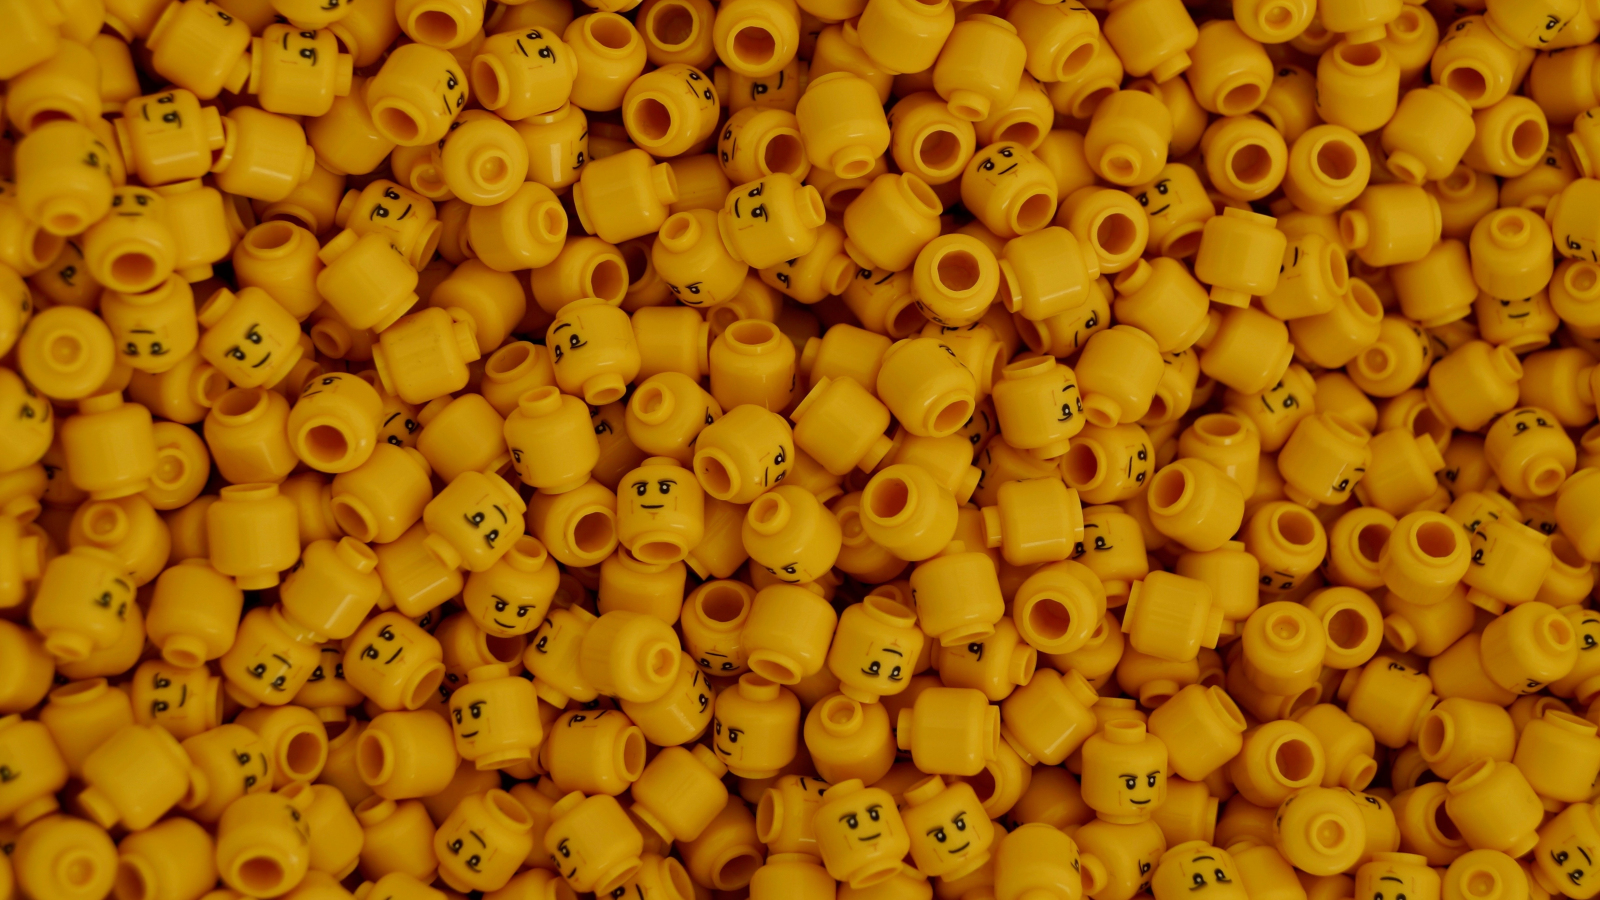 Yellow, Lego, toy, 1600x900 wallpaper